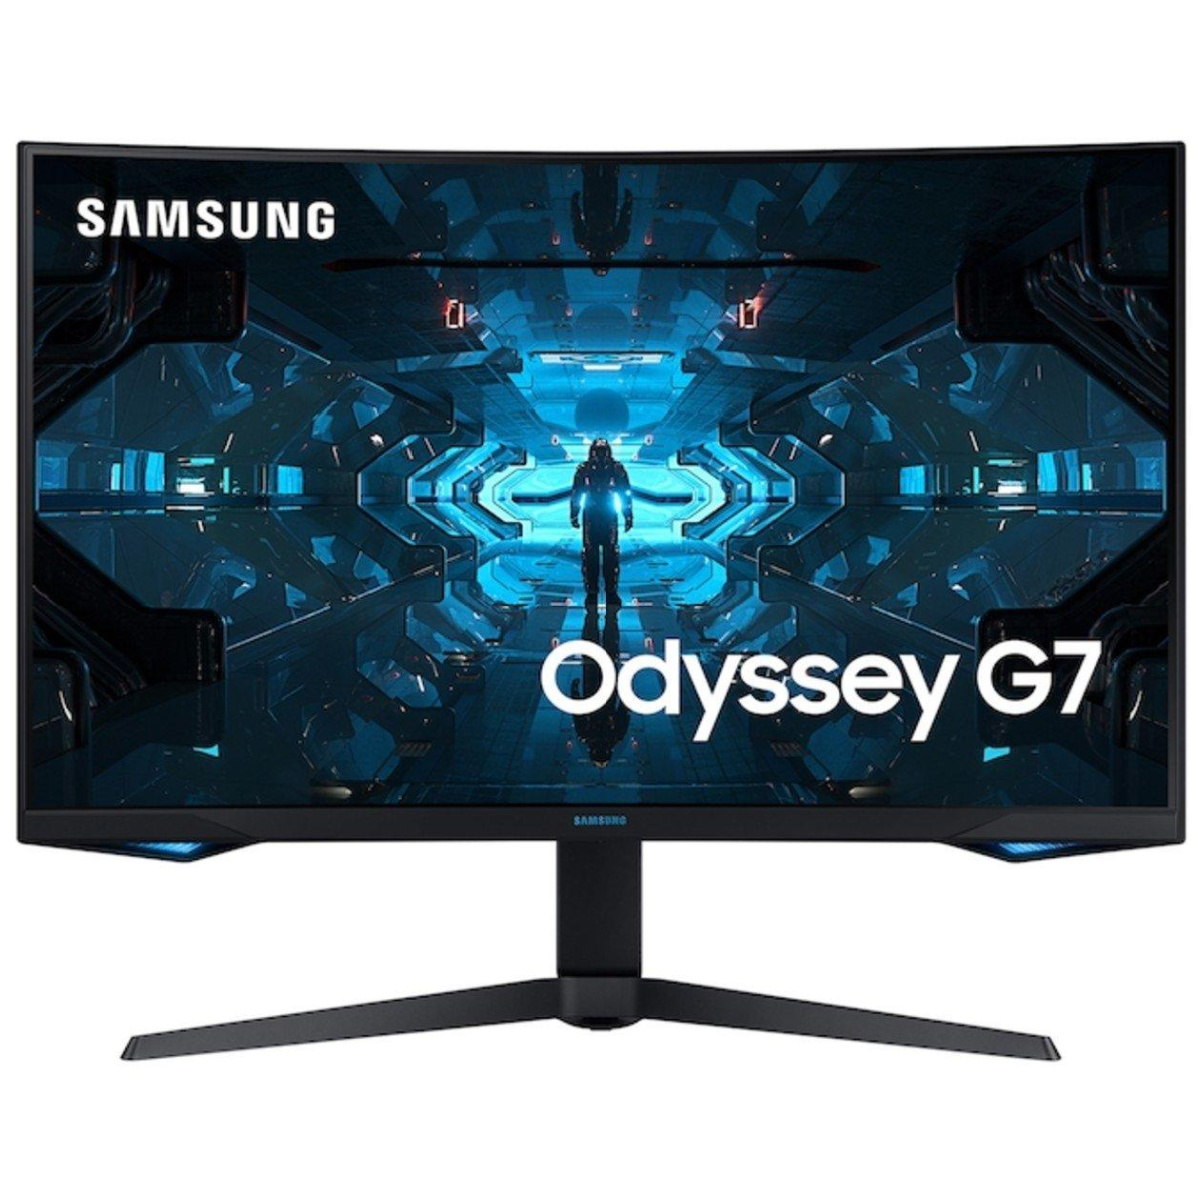 Samsung Odyssey G7 32-Inch Curved Gaming Monitor